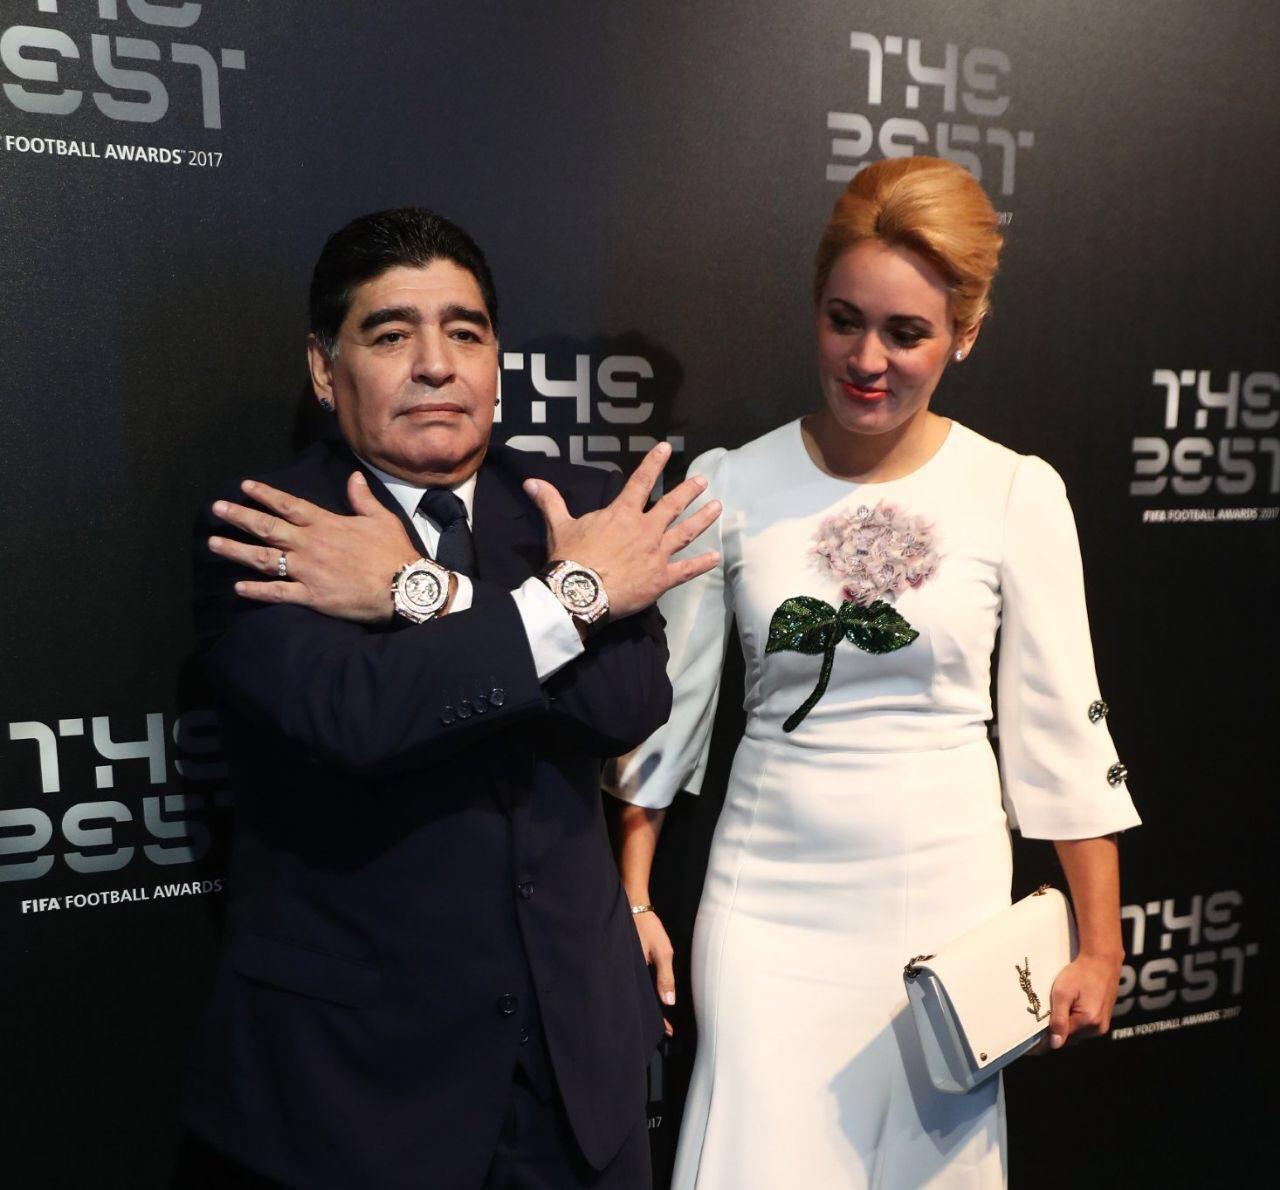 مارادونا و همسرش بر روی فرش سبز مراسم The Best +عکس 